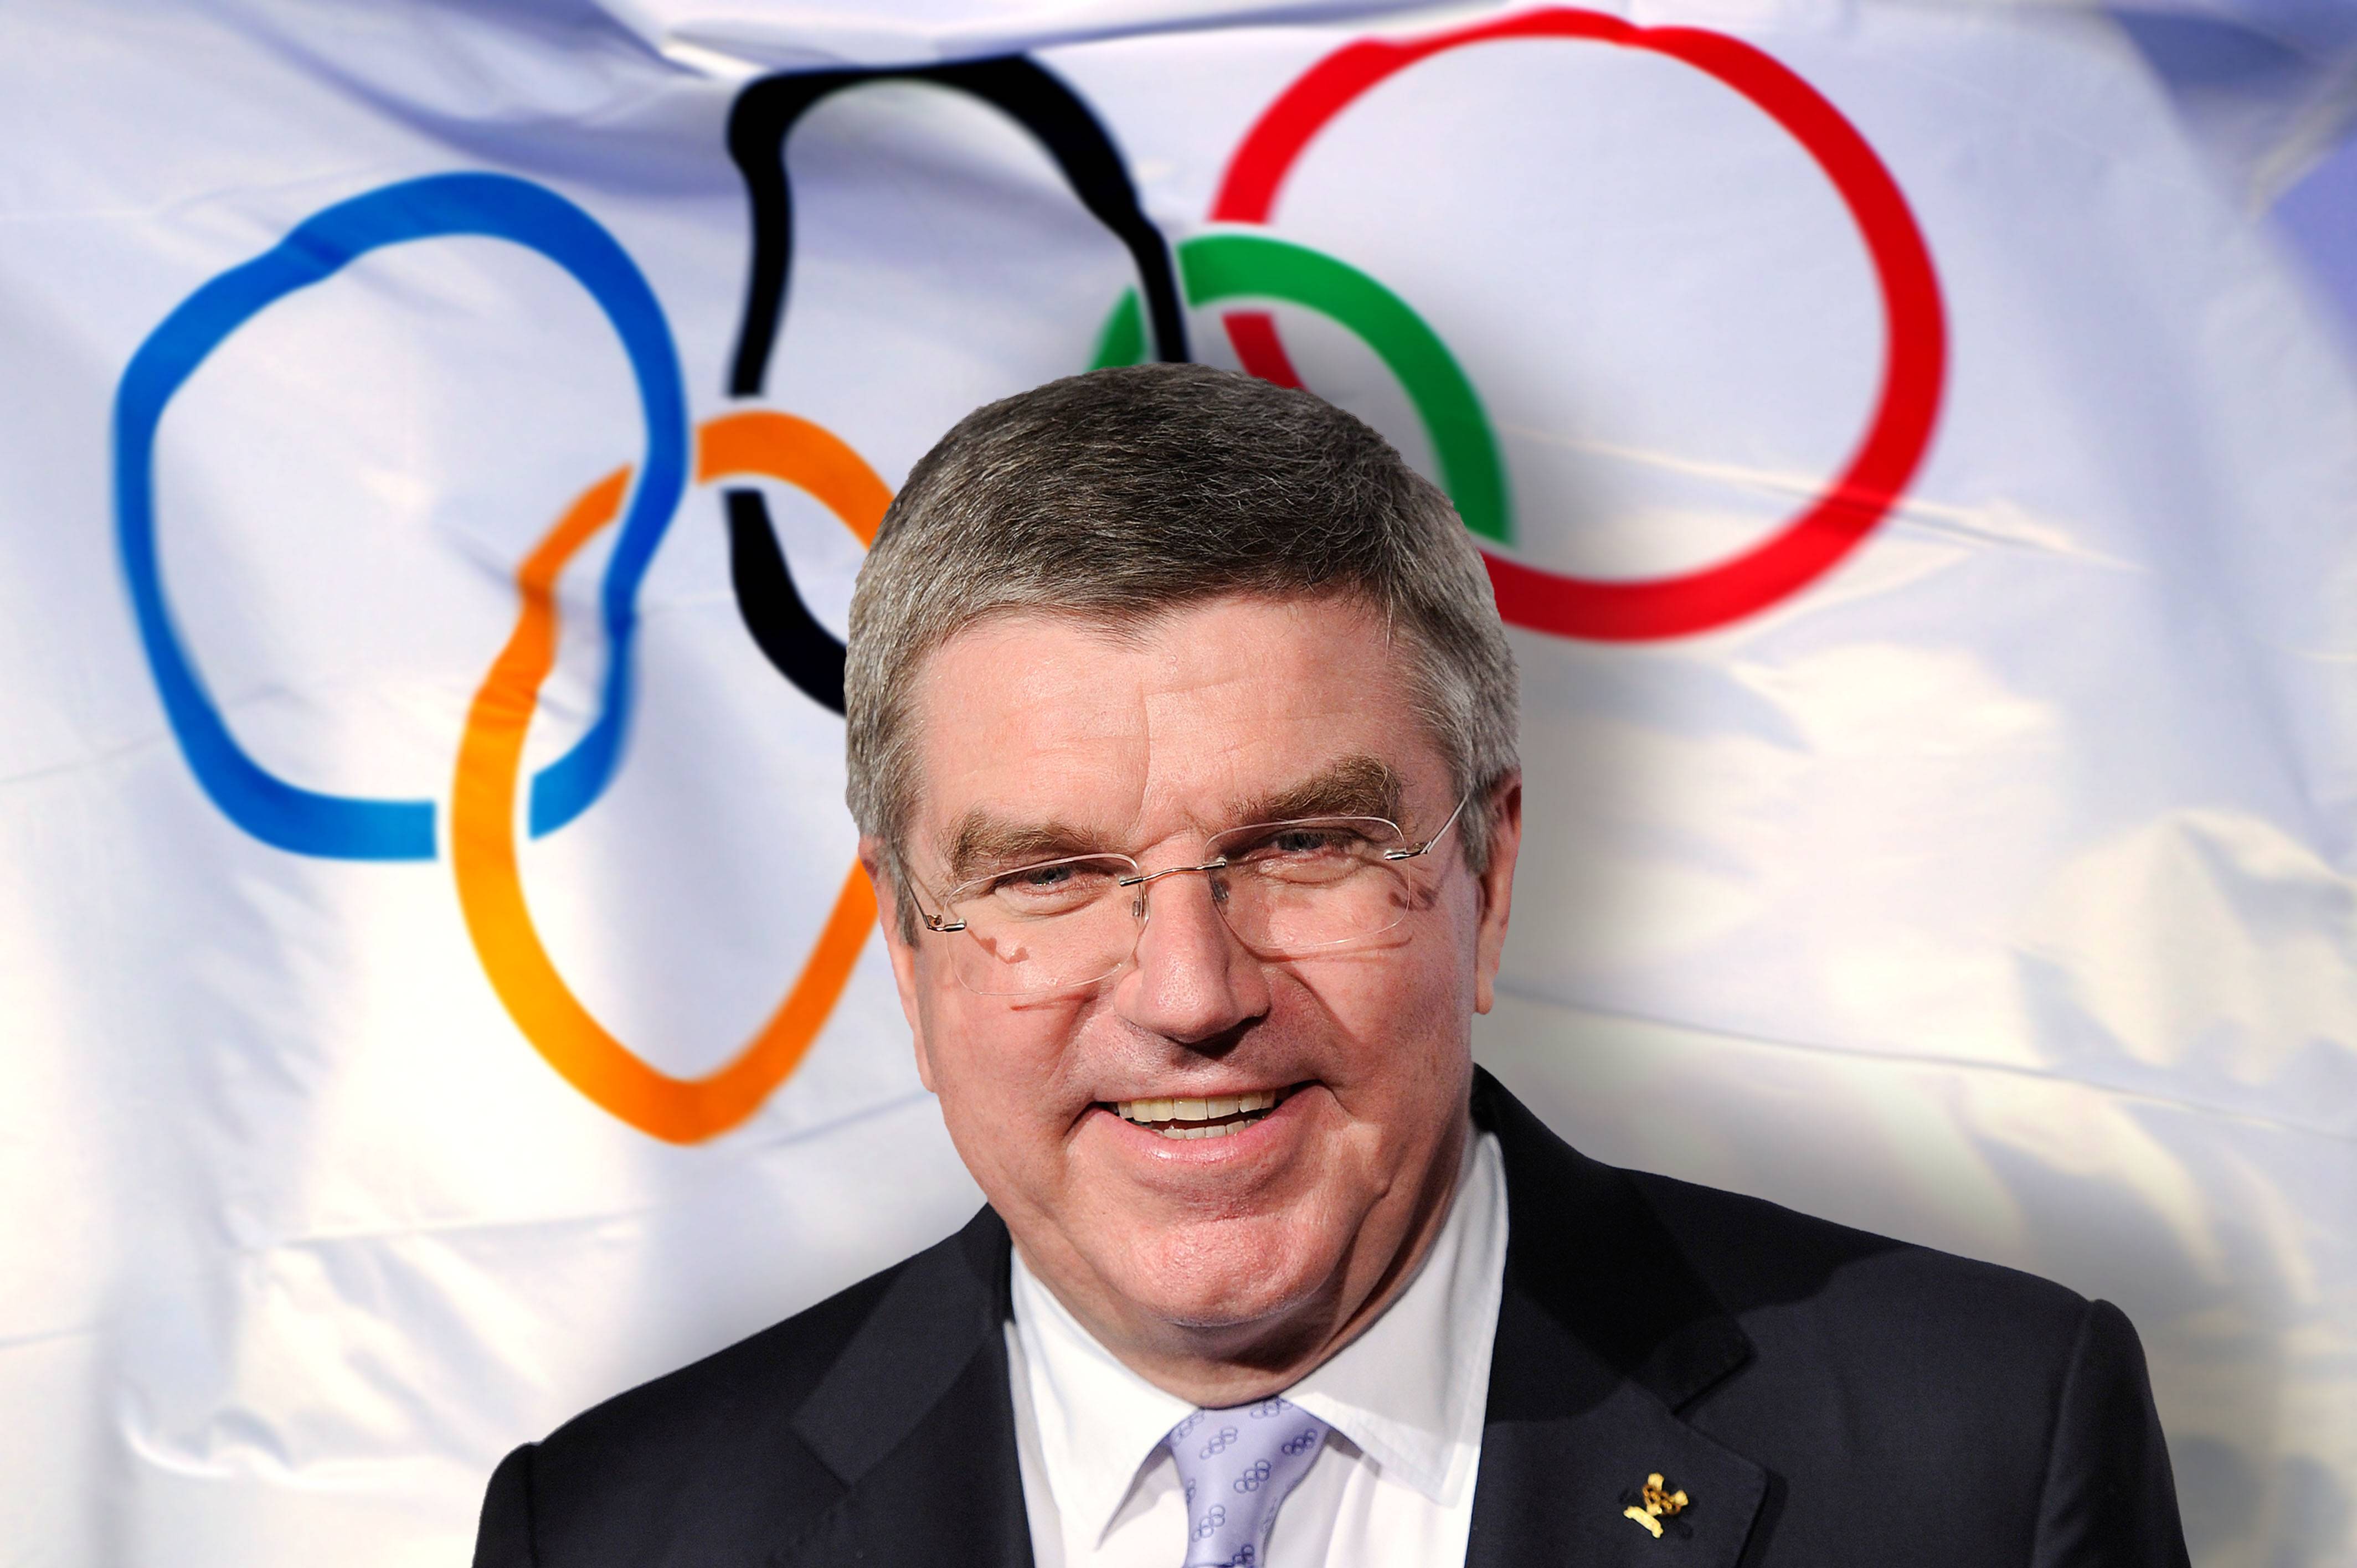 Tokyo 2020 to headline IOC Executive Board meeting this week